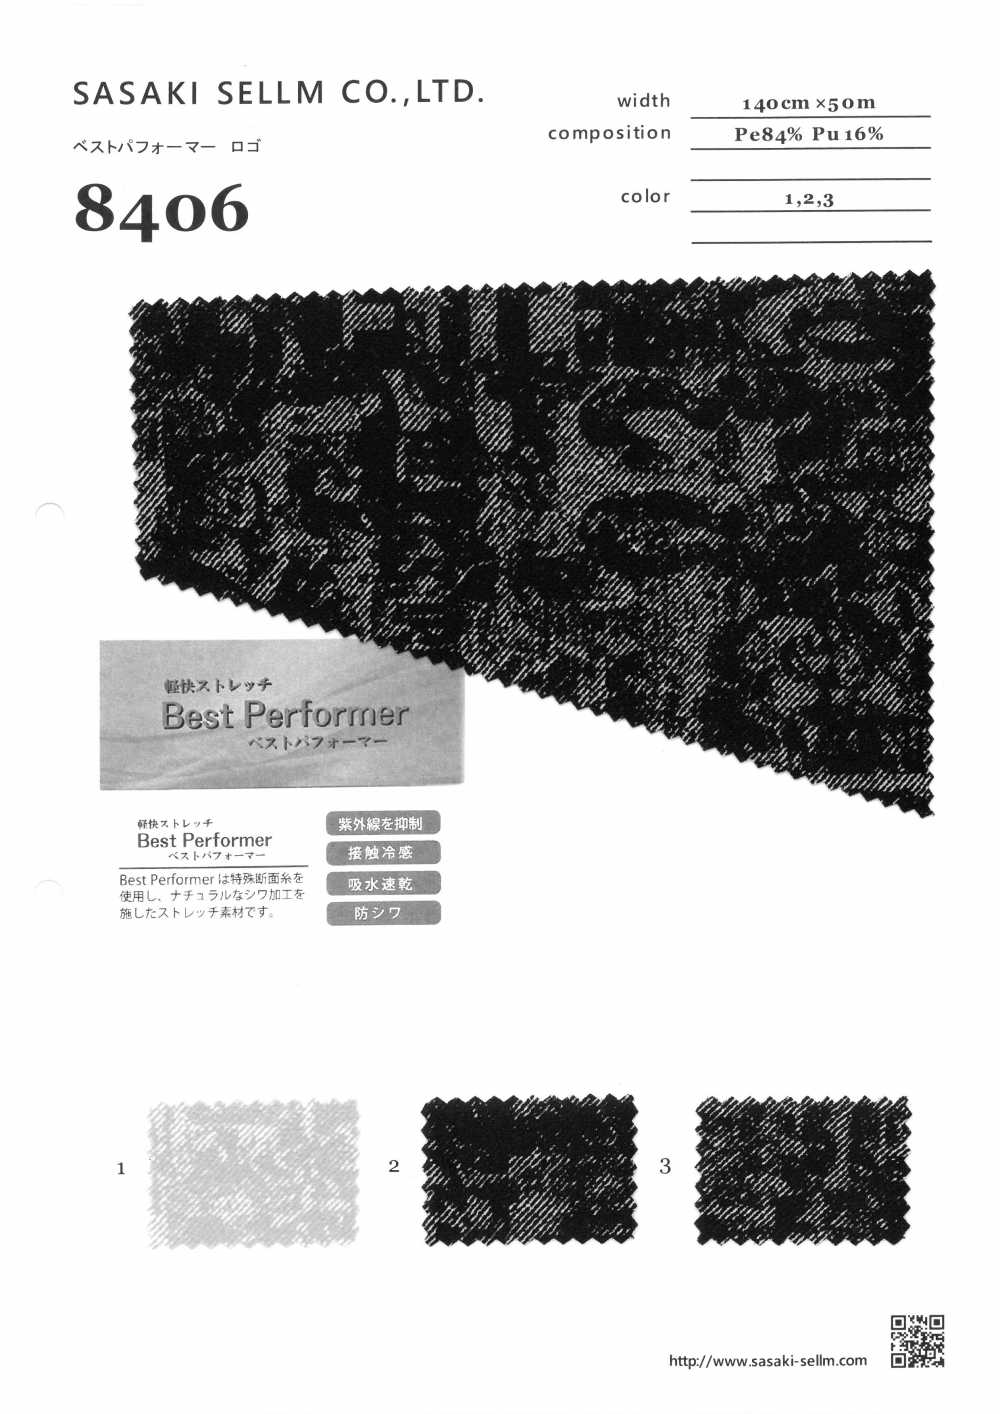 8406 Vest Performer Logo[Textile / Fabric] SASAKISELLM